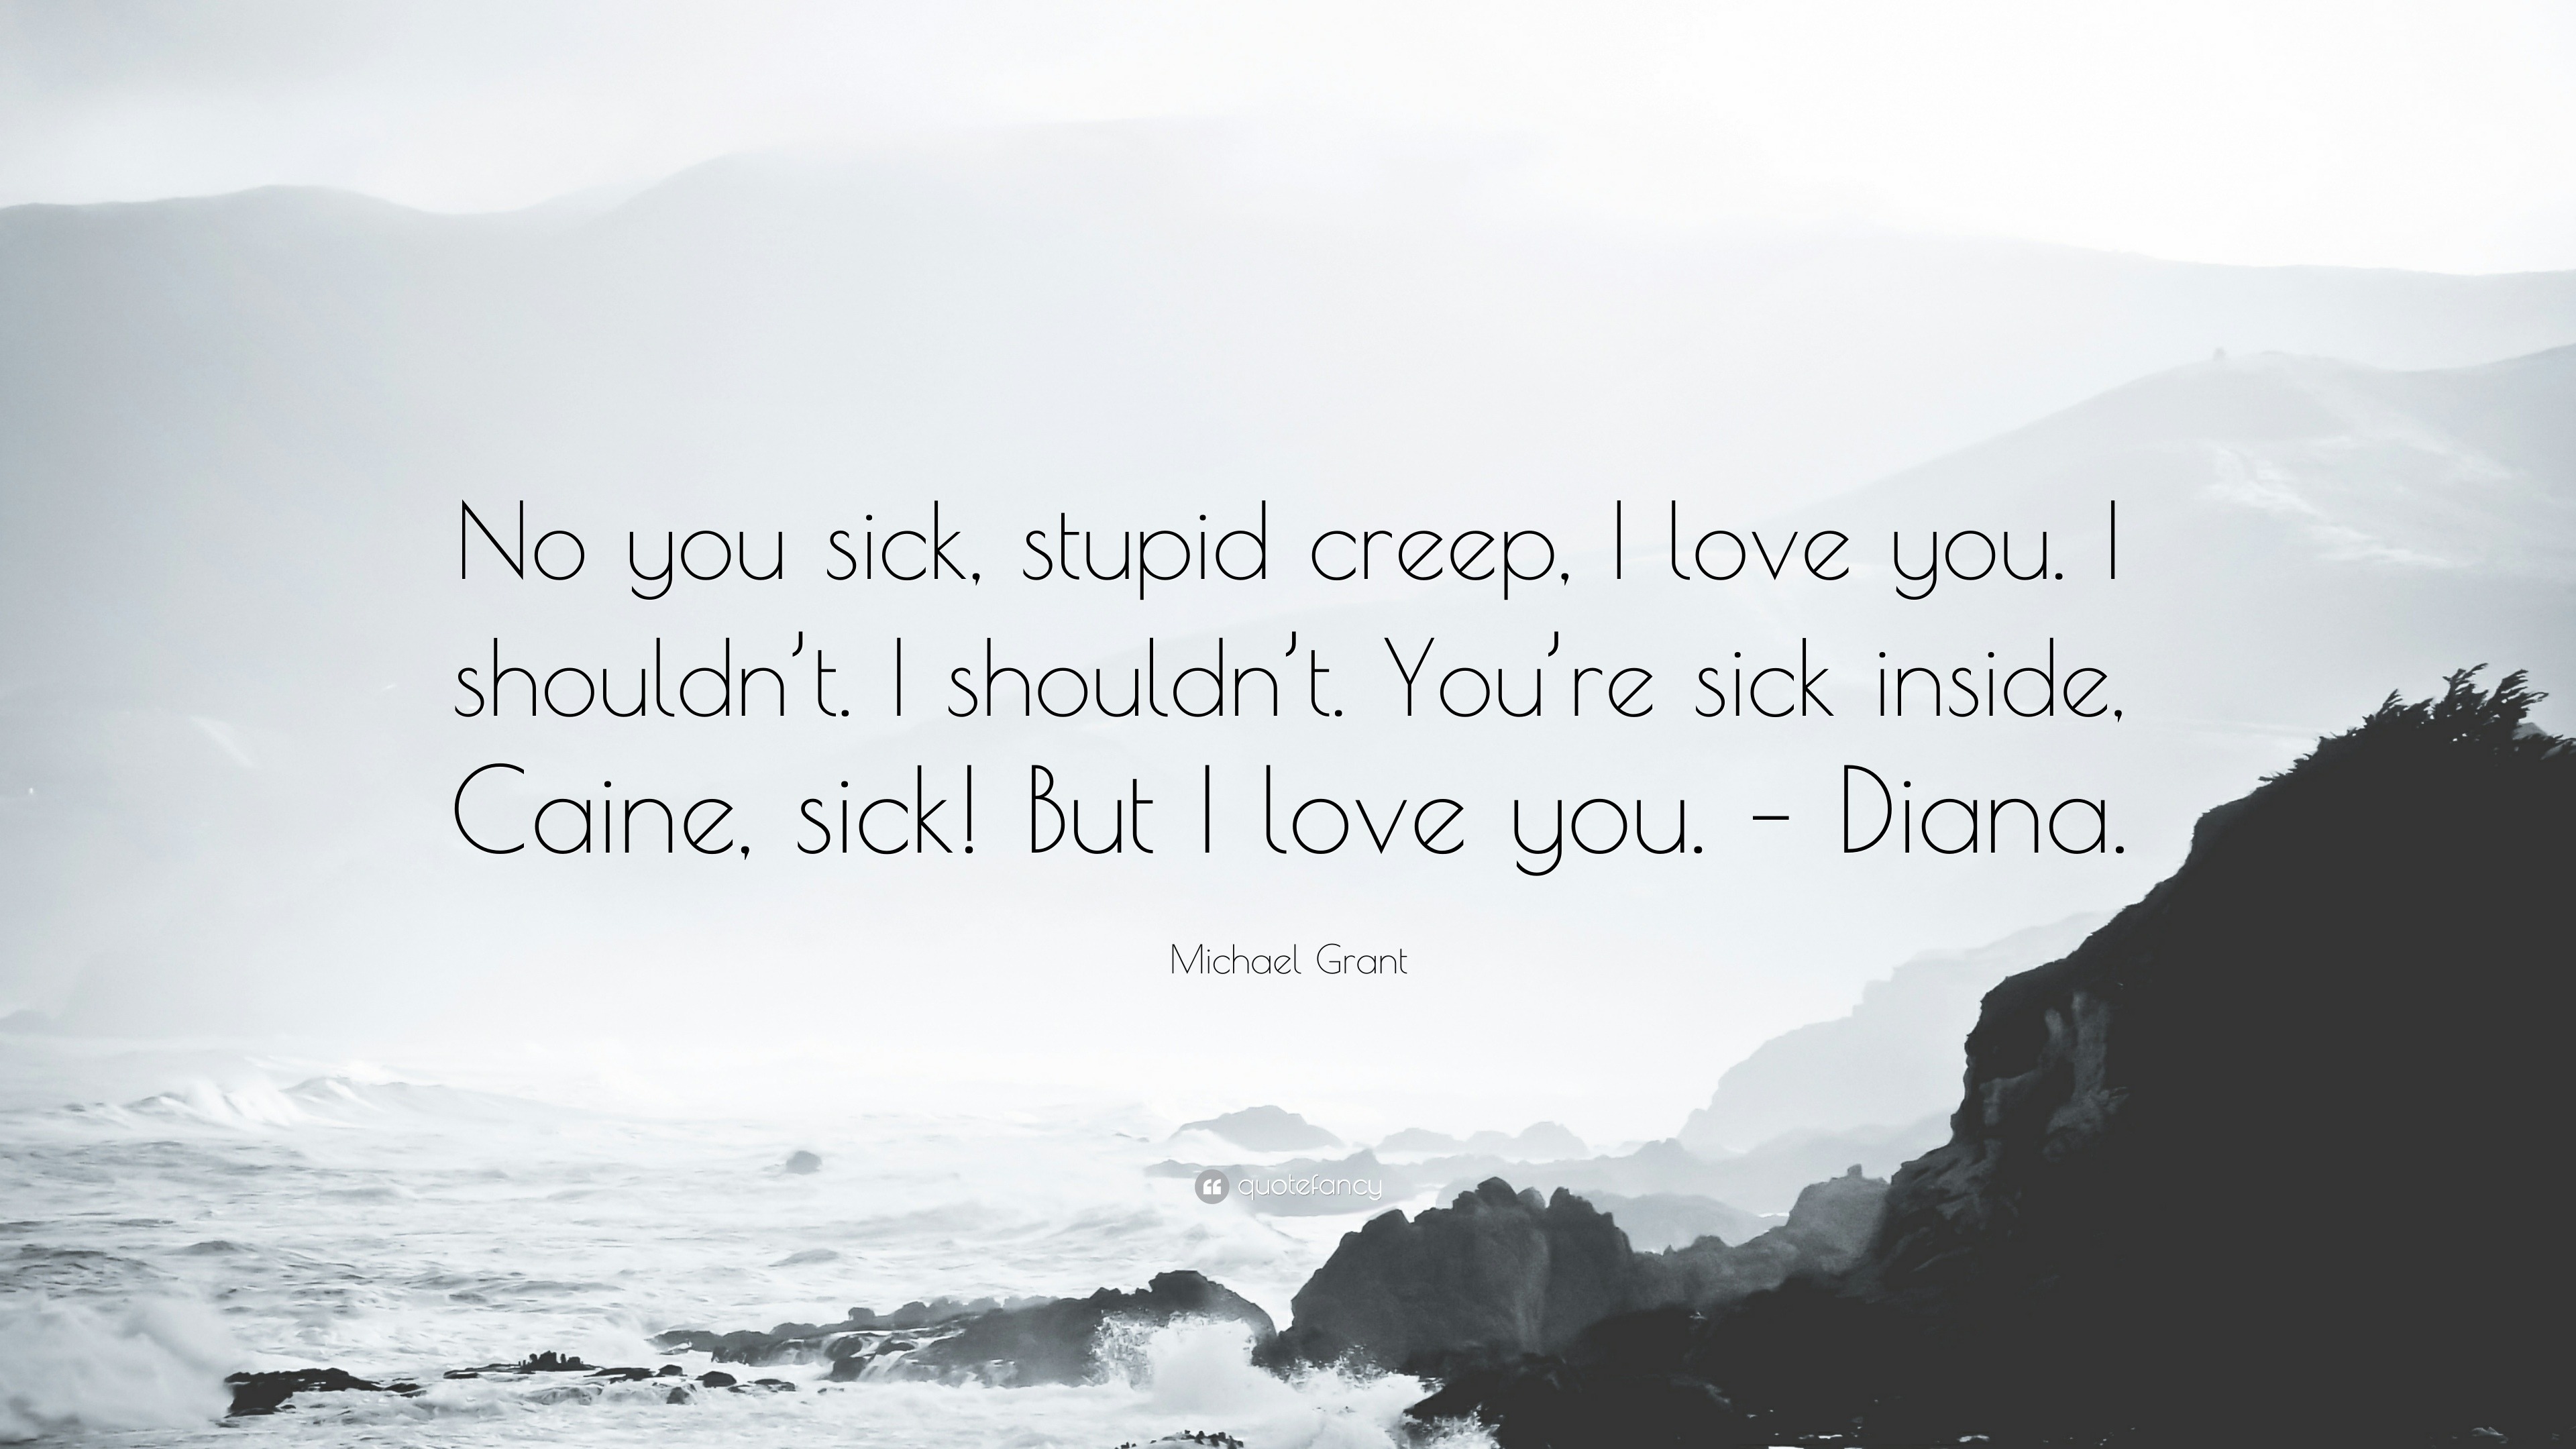 Michael Grant Quote “No you sick stupid creep I love you